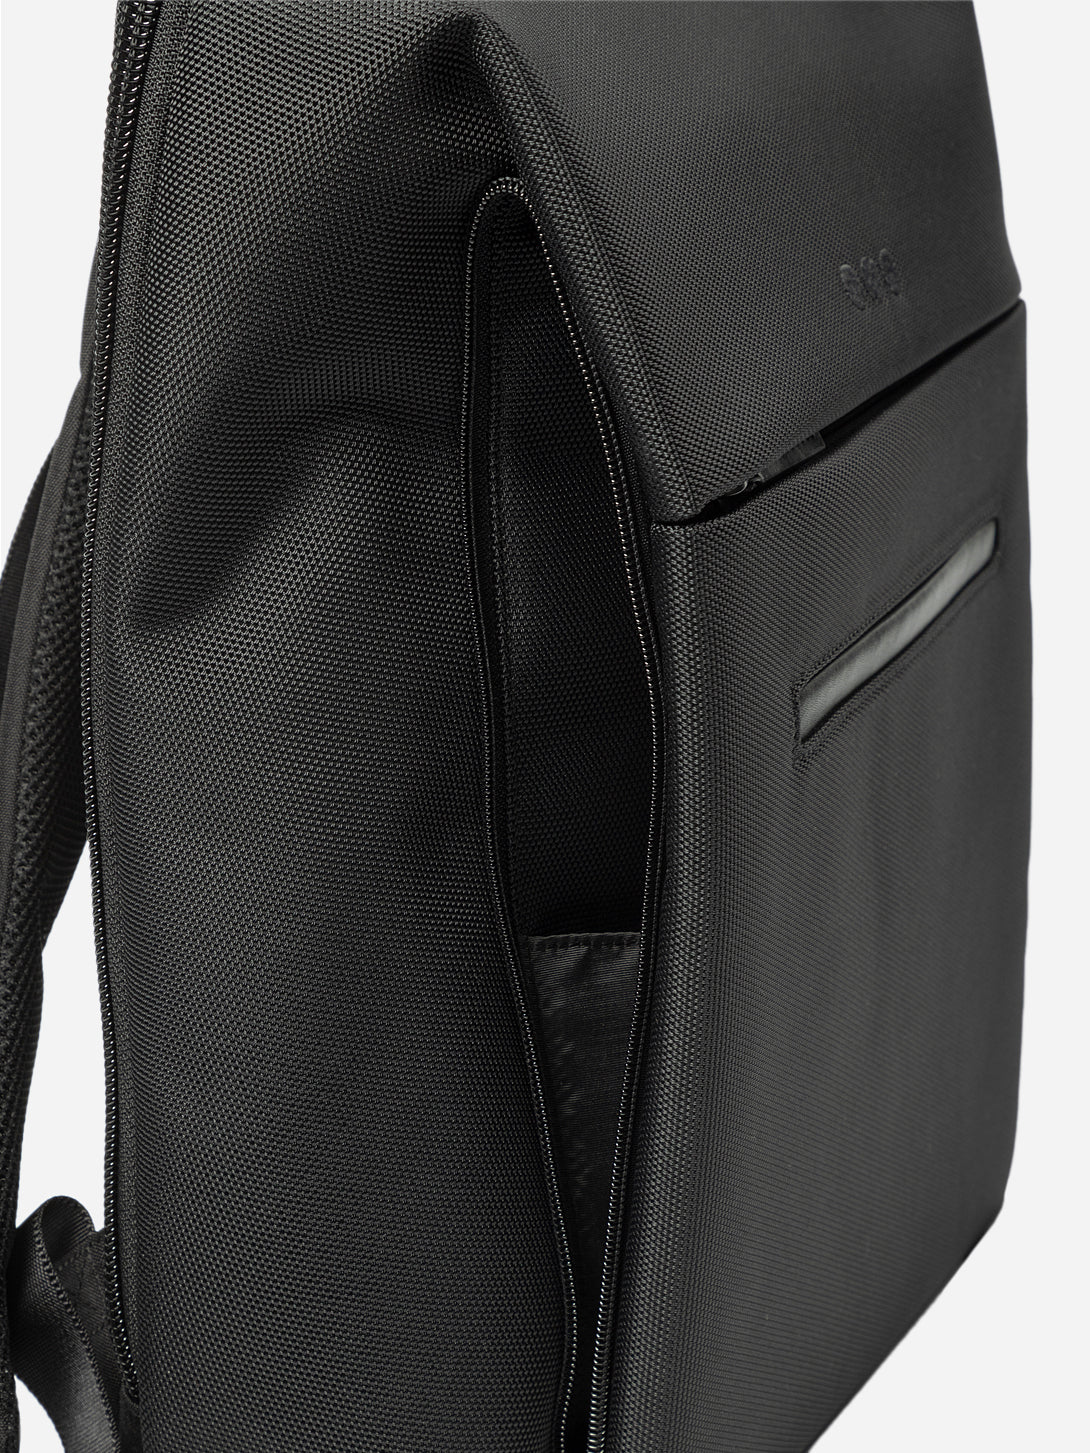 Black All-Things Backpack ONS Utility Storage Sleek Contemporary Backpack